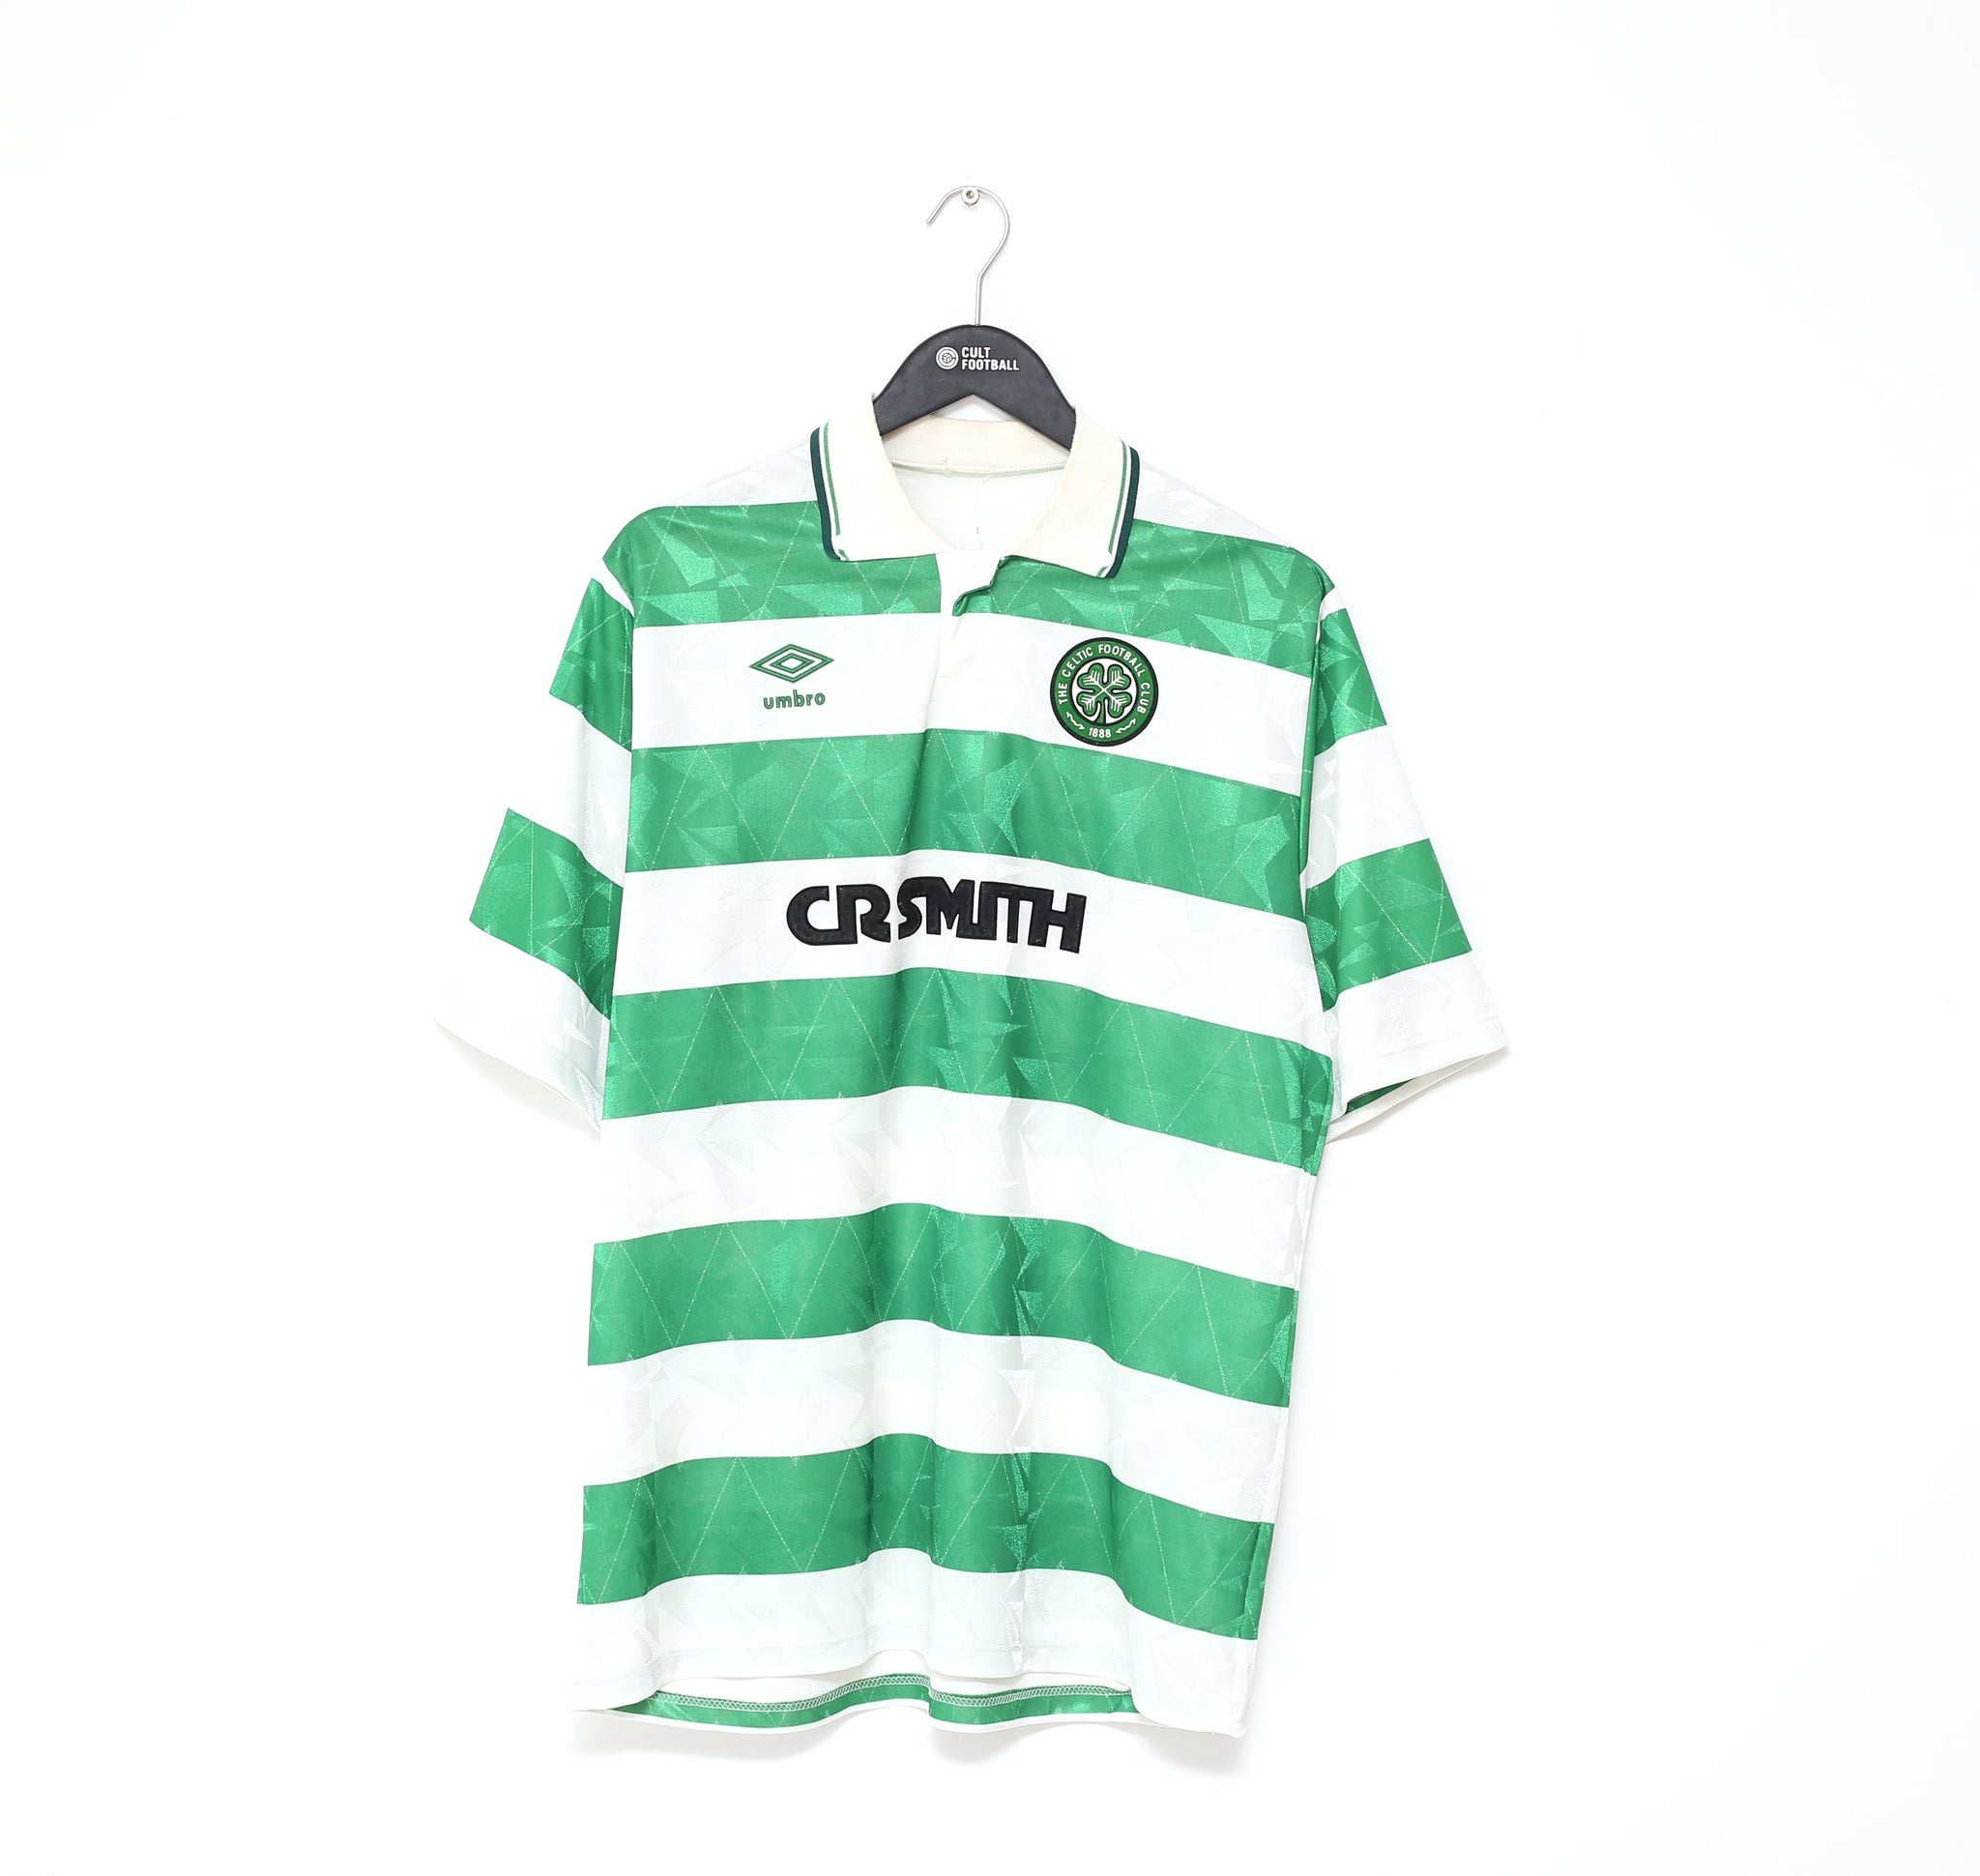 Celtic 1992 - 1993 Away football shirt jersey Umbro size S